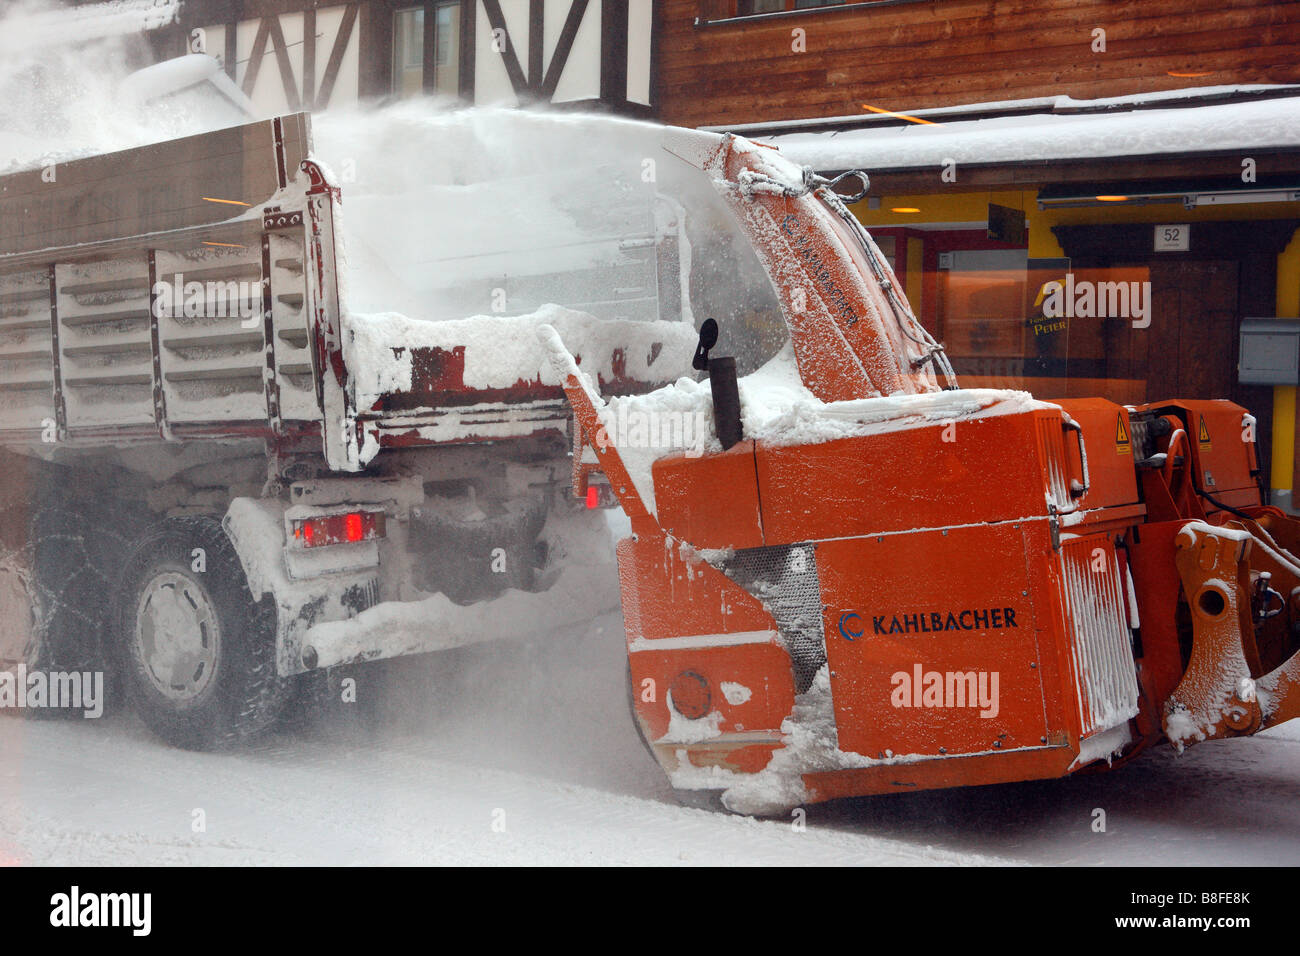 Snow scenes in busy alpine ski resort of Saint Anton, Austria. Stock Photo